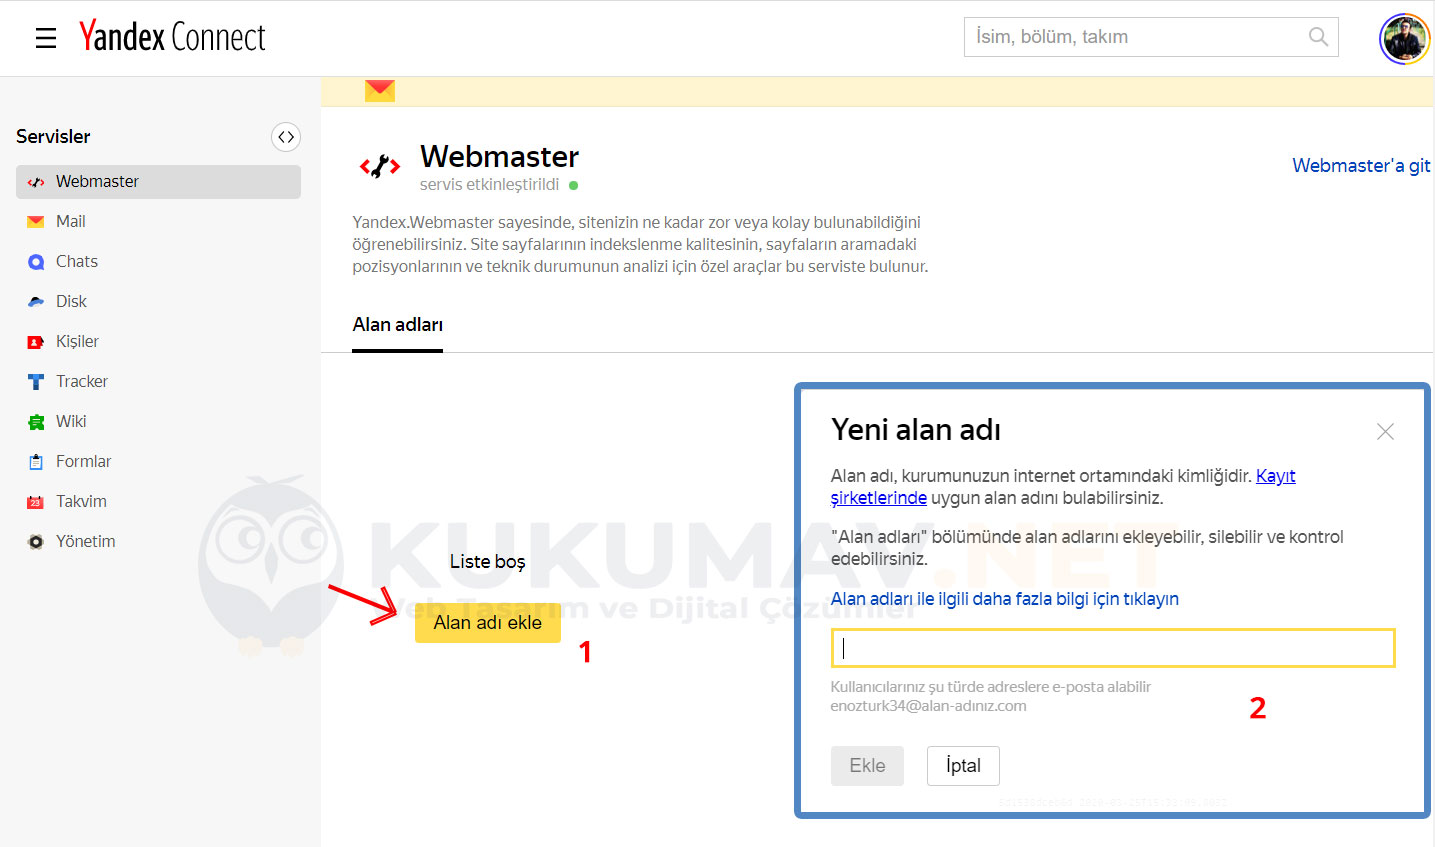 Yandex Connect Webmaster Servisi